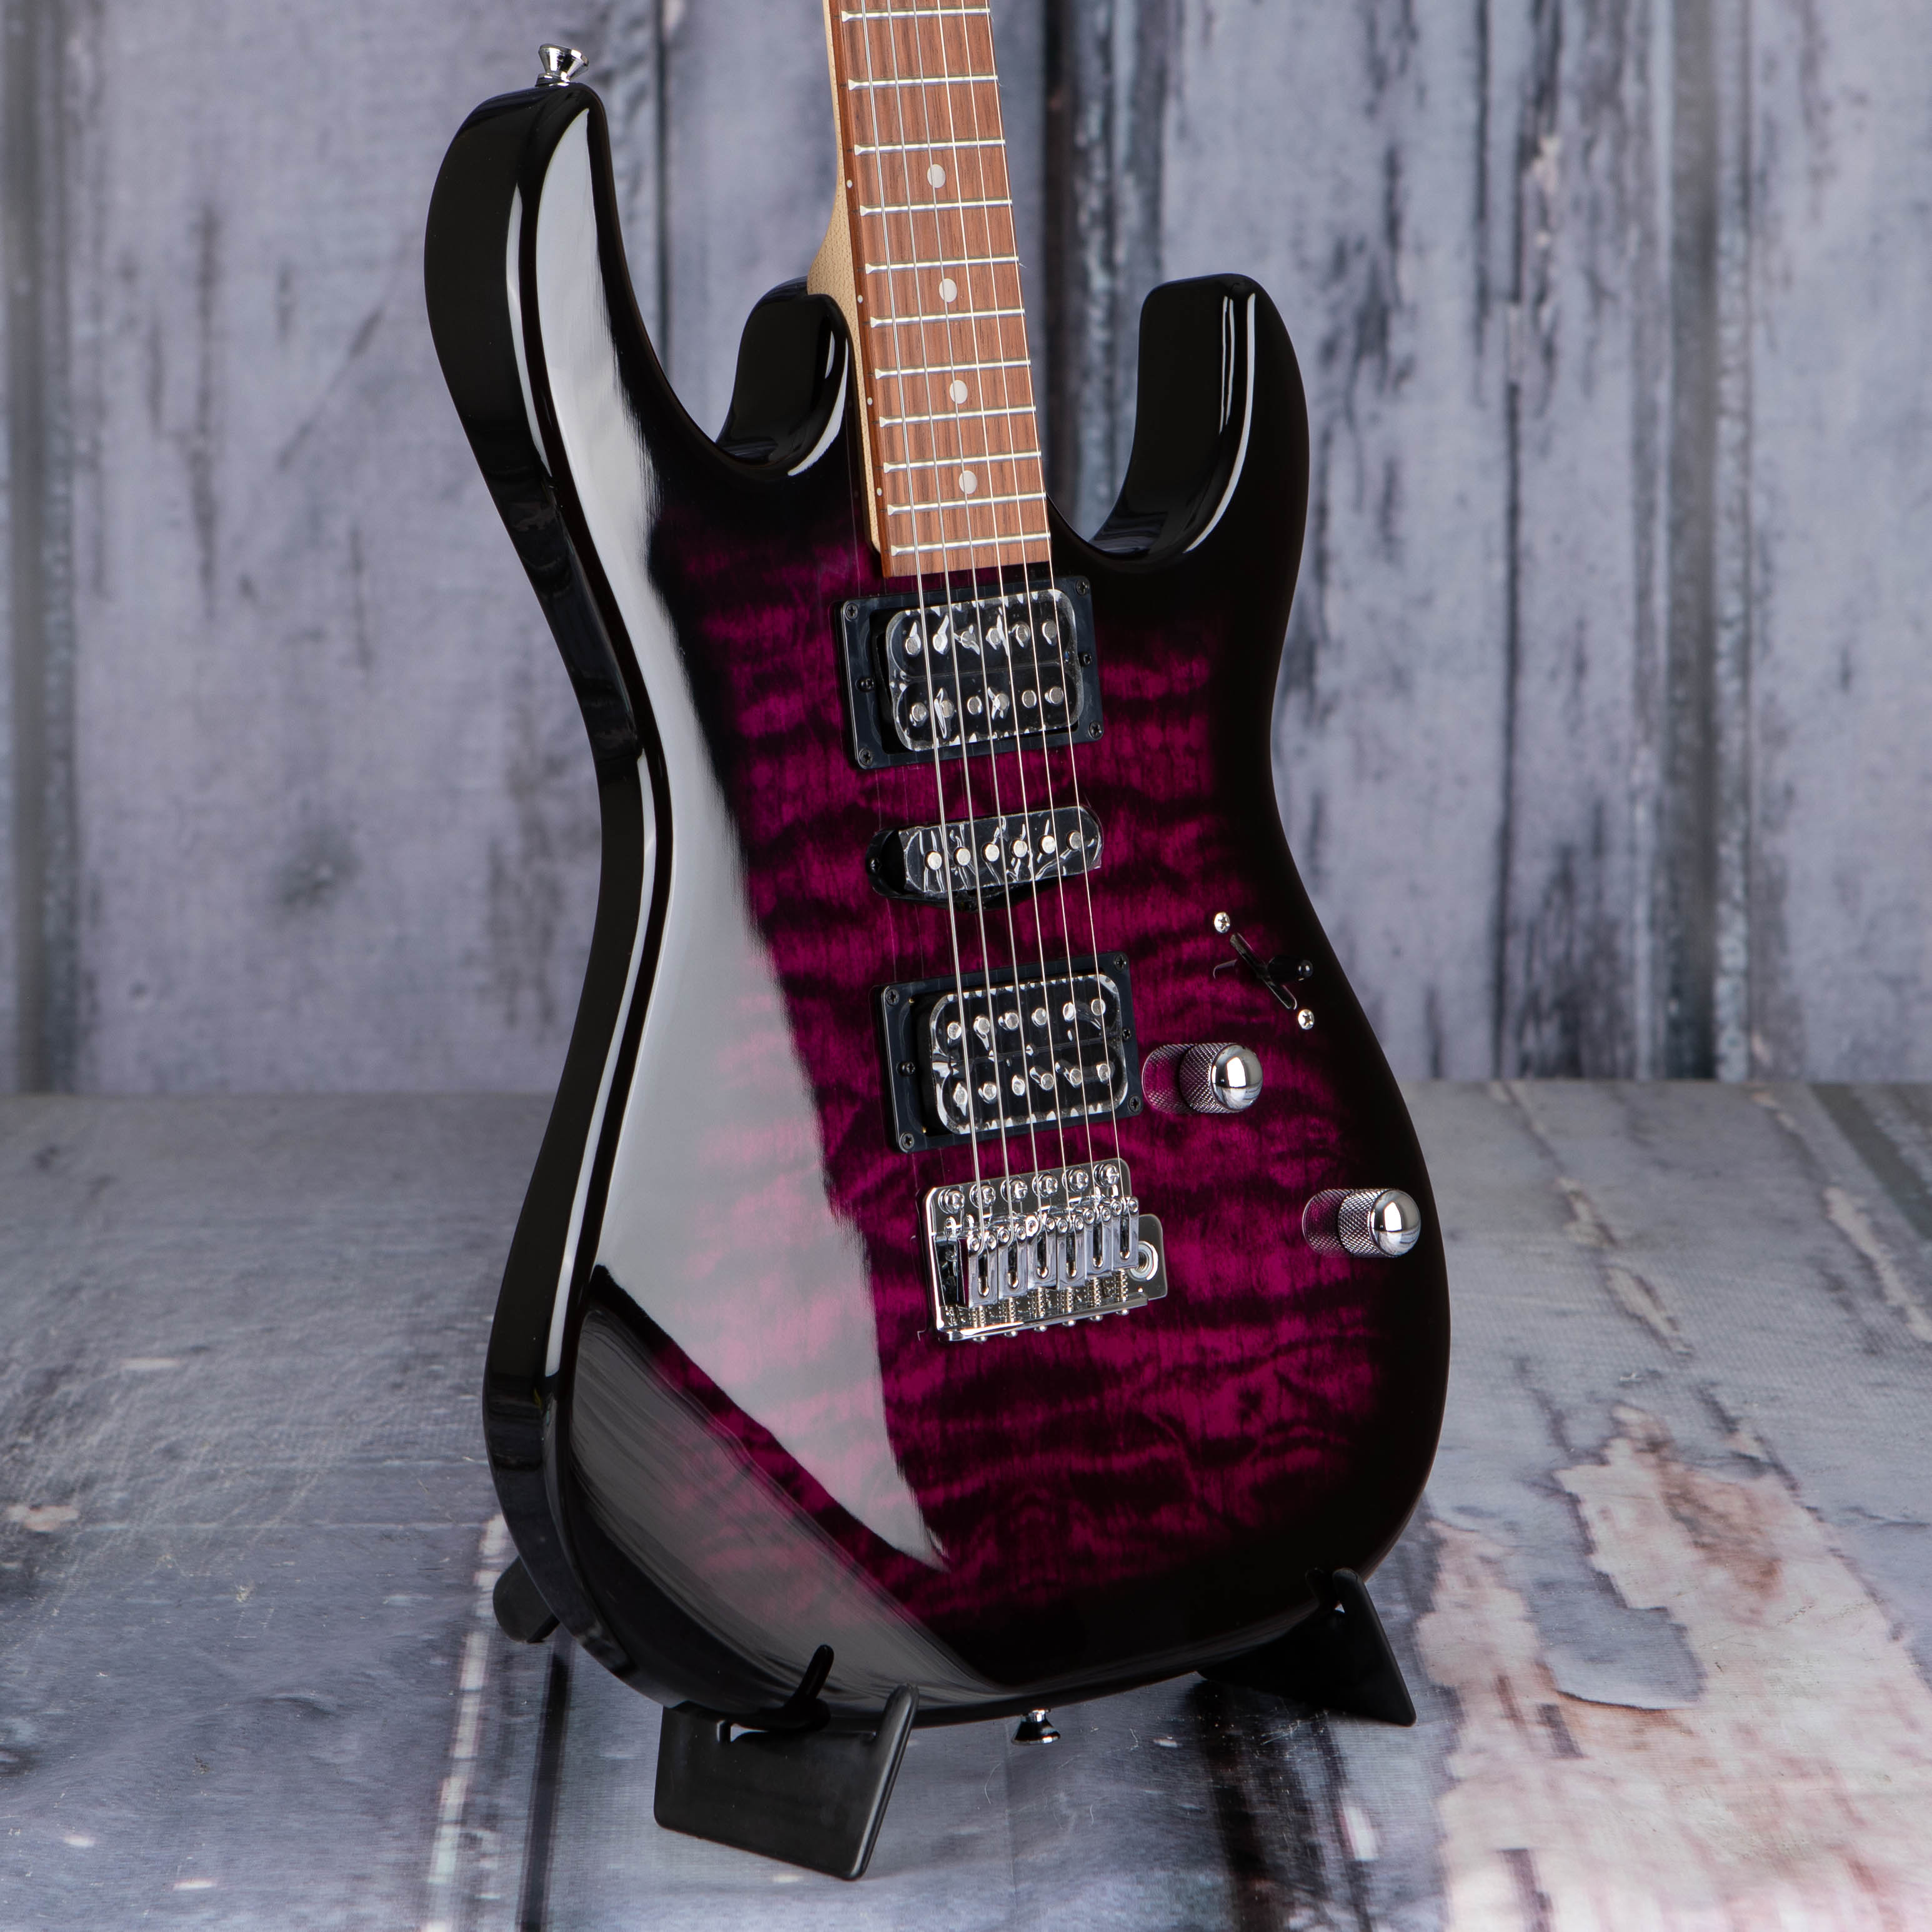 Ibanez Gio GRX70QA Electric Guitar, Transparent Violet Sunburst, angle